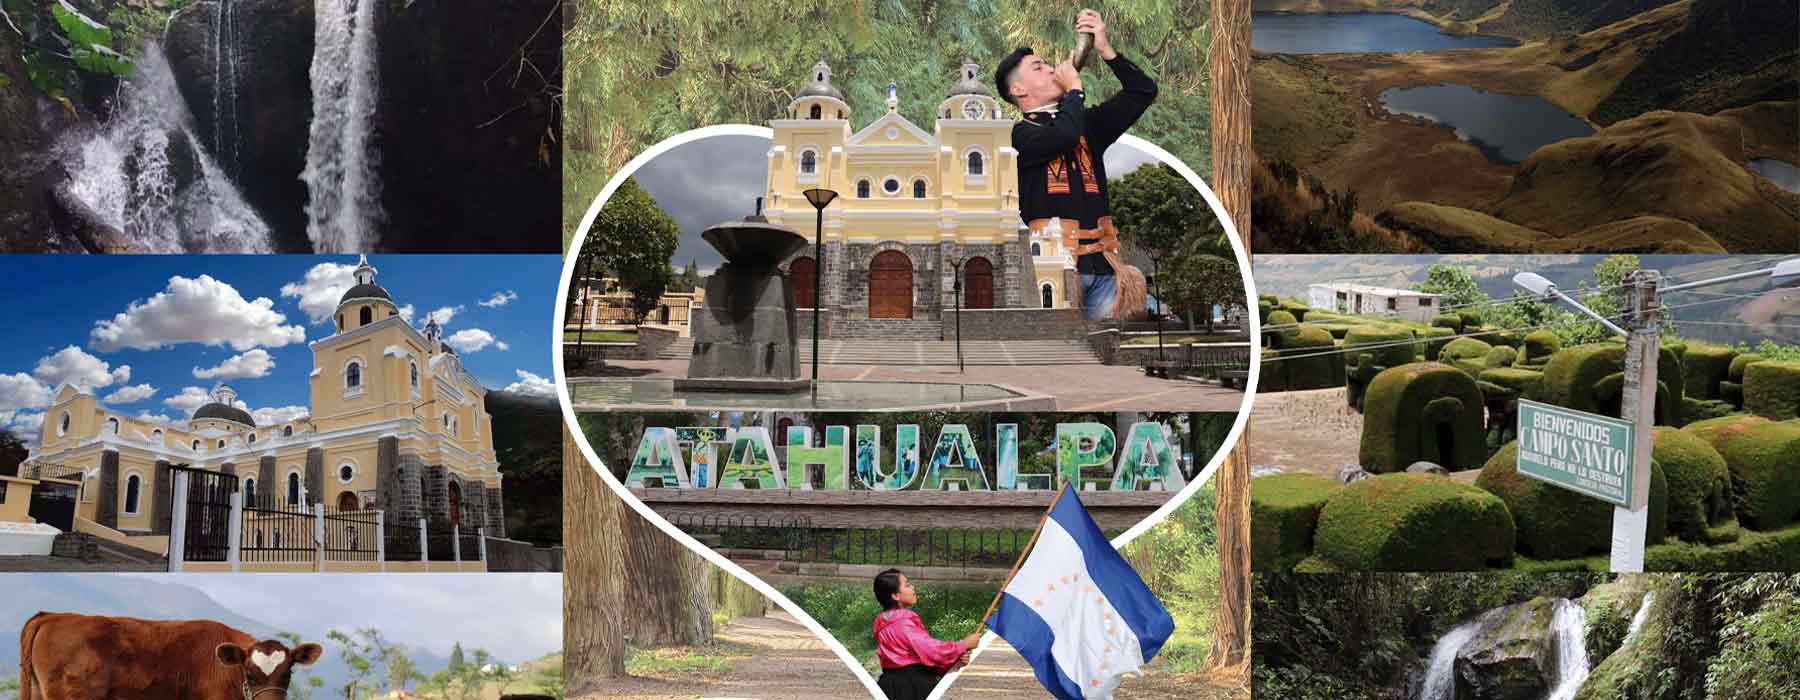 Atahualpa Habaspamba